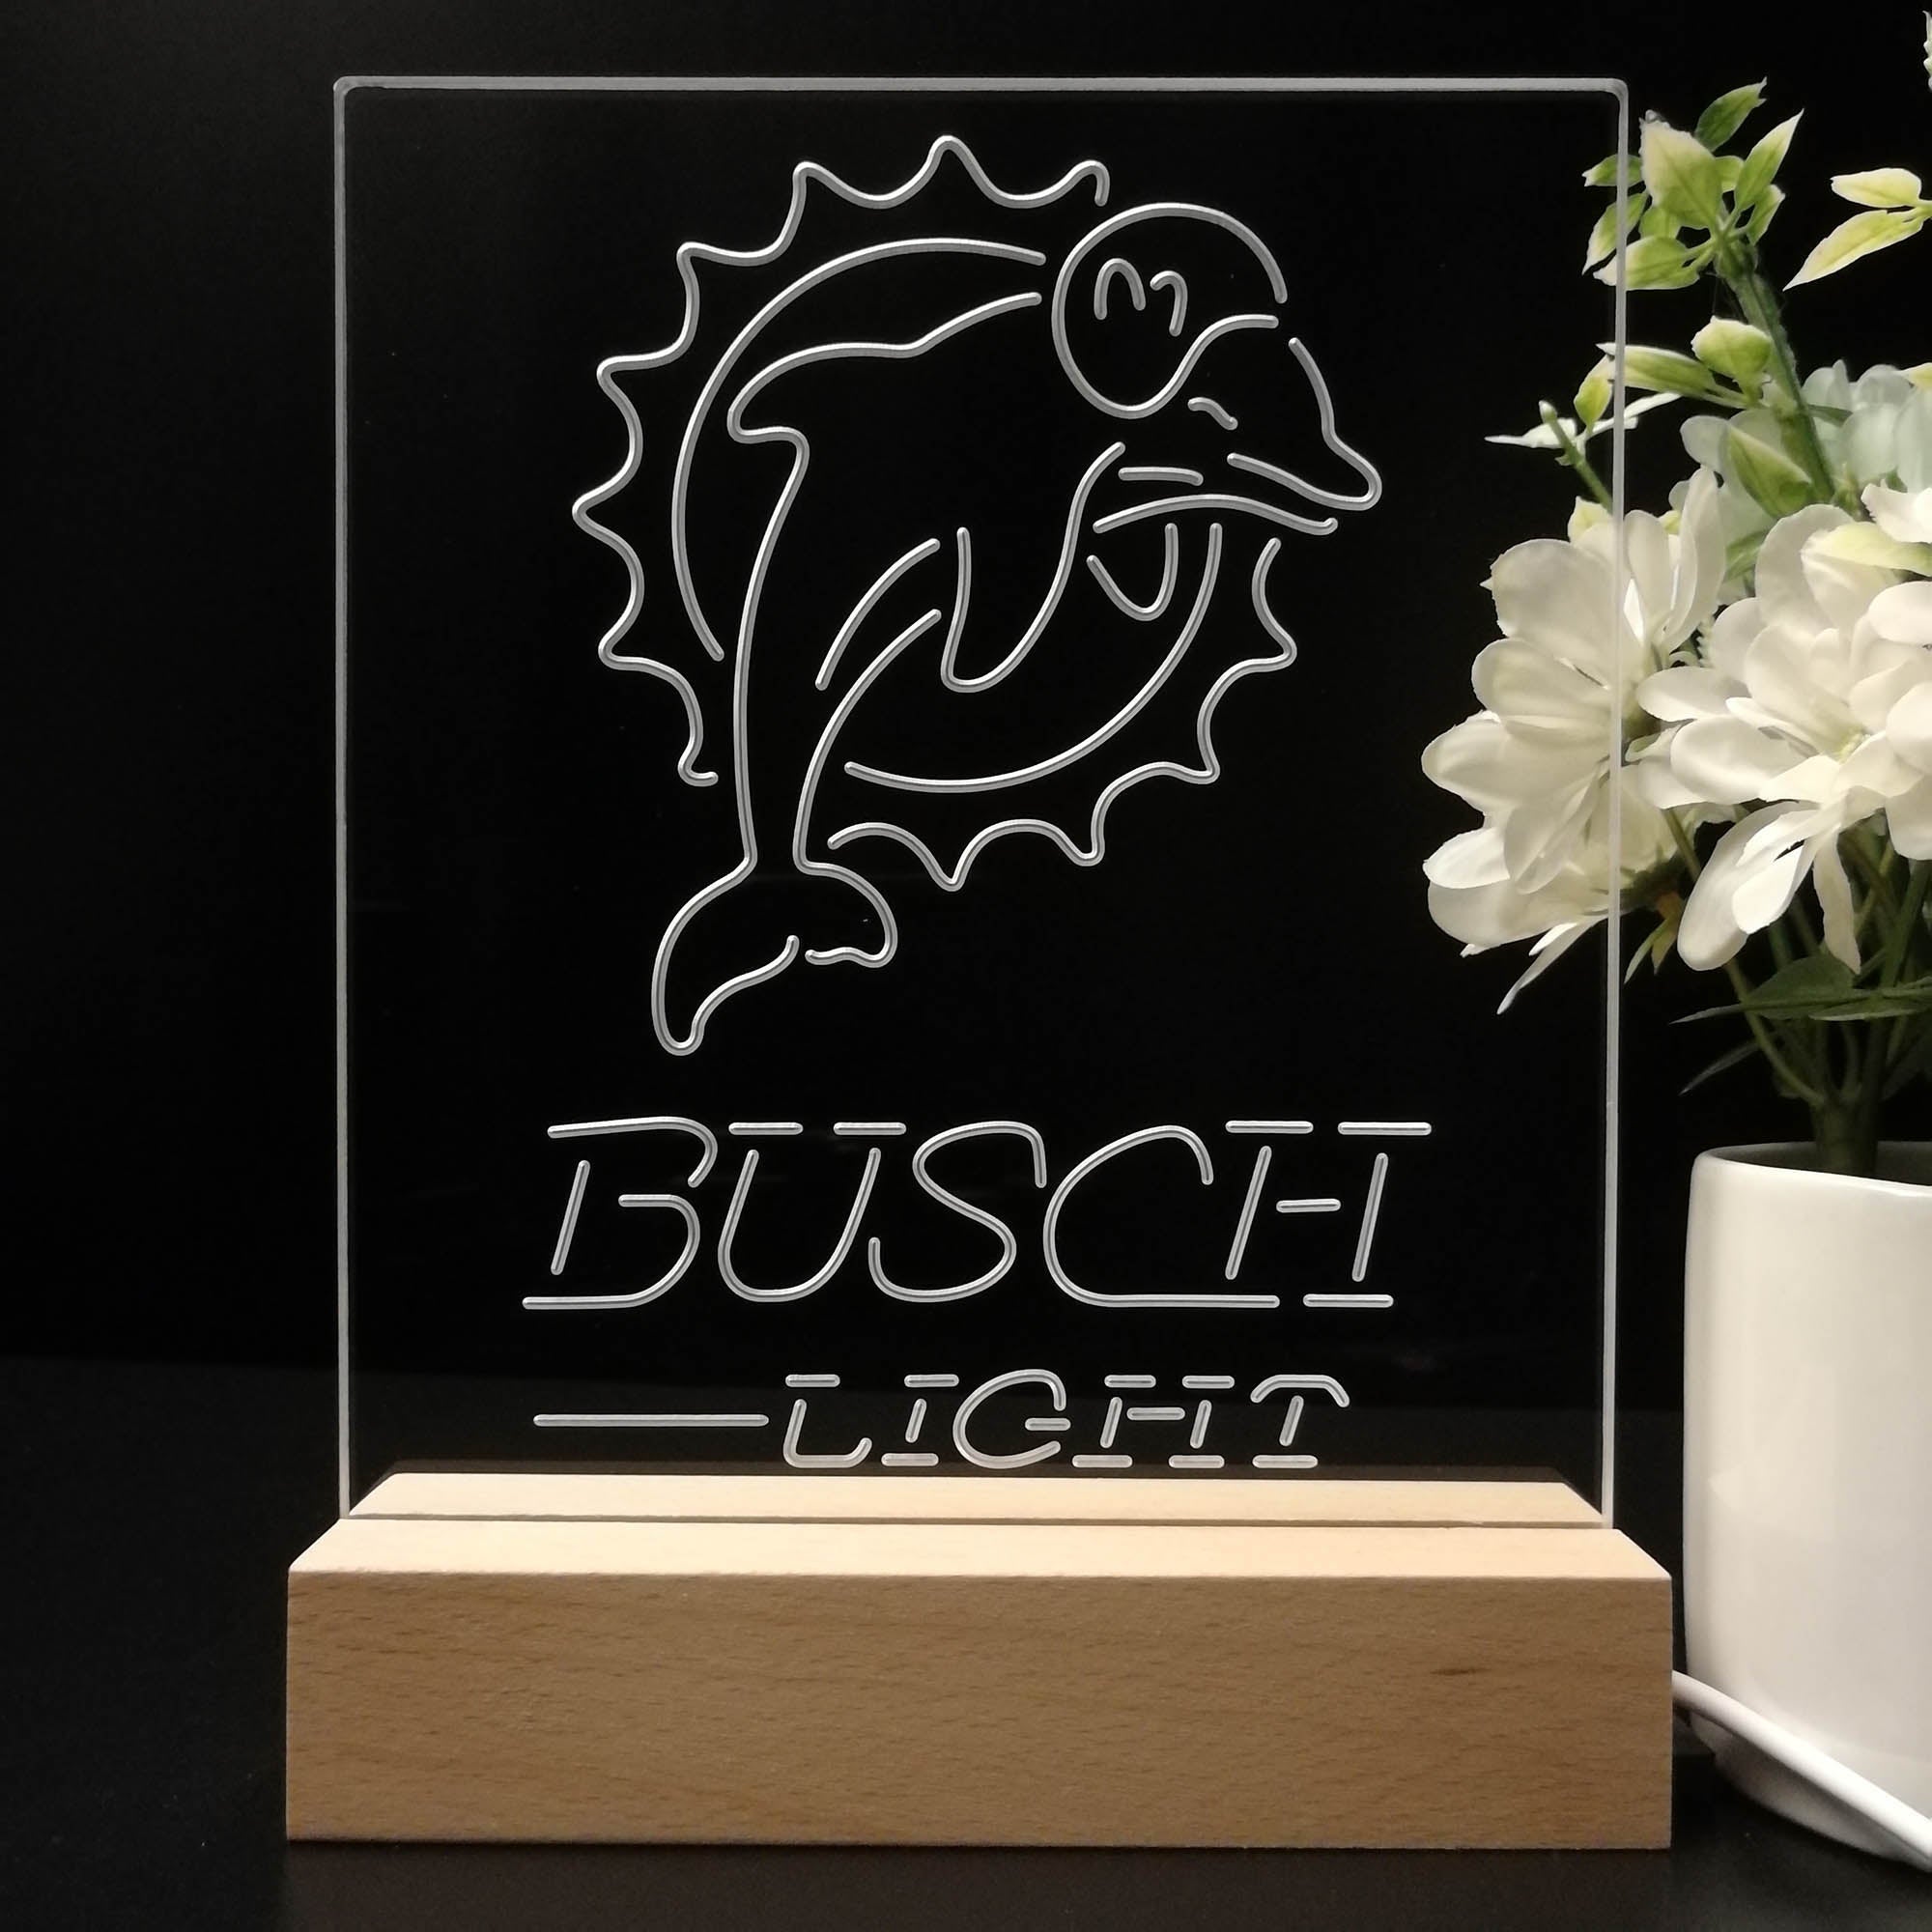 Miami Dolphins Busch Light 3D LED Optical Illusion Sport Team Night Light